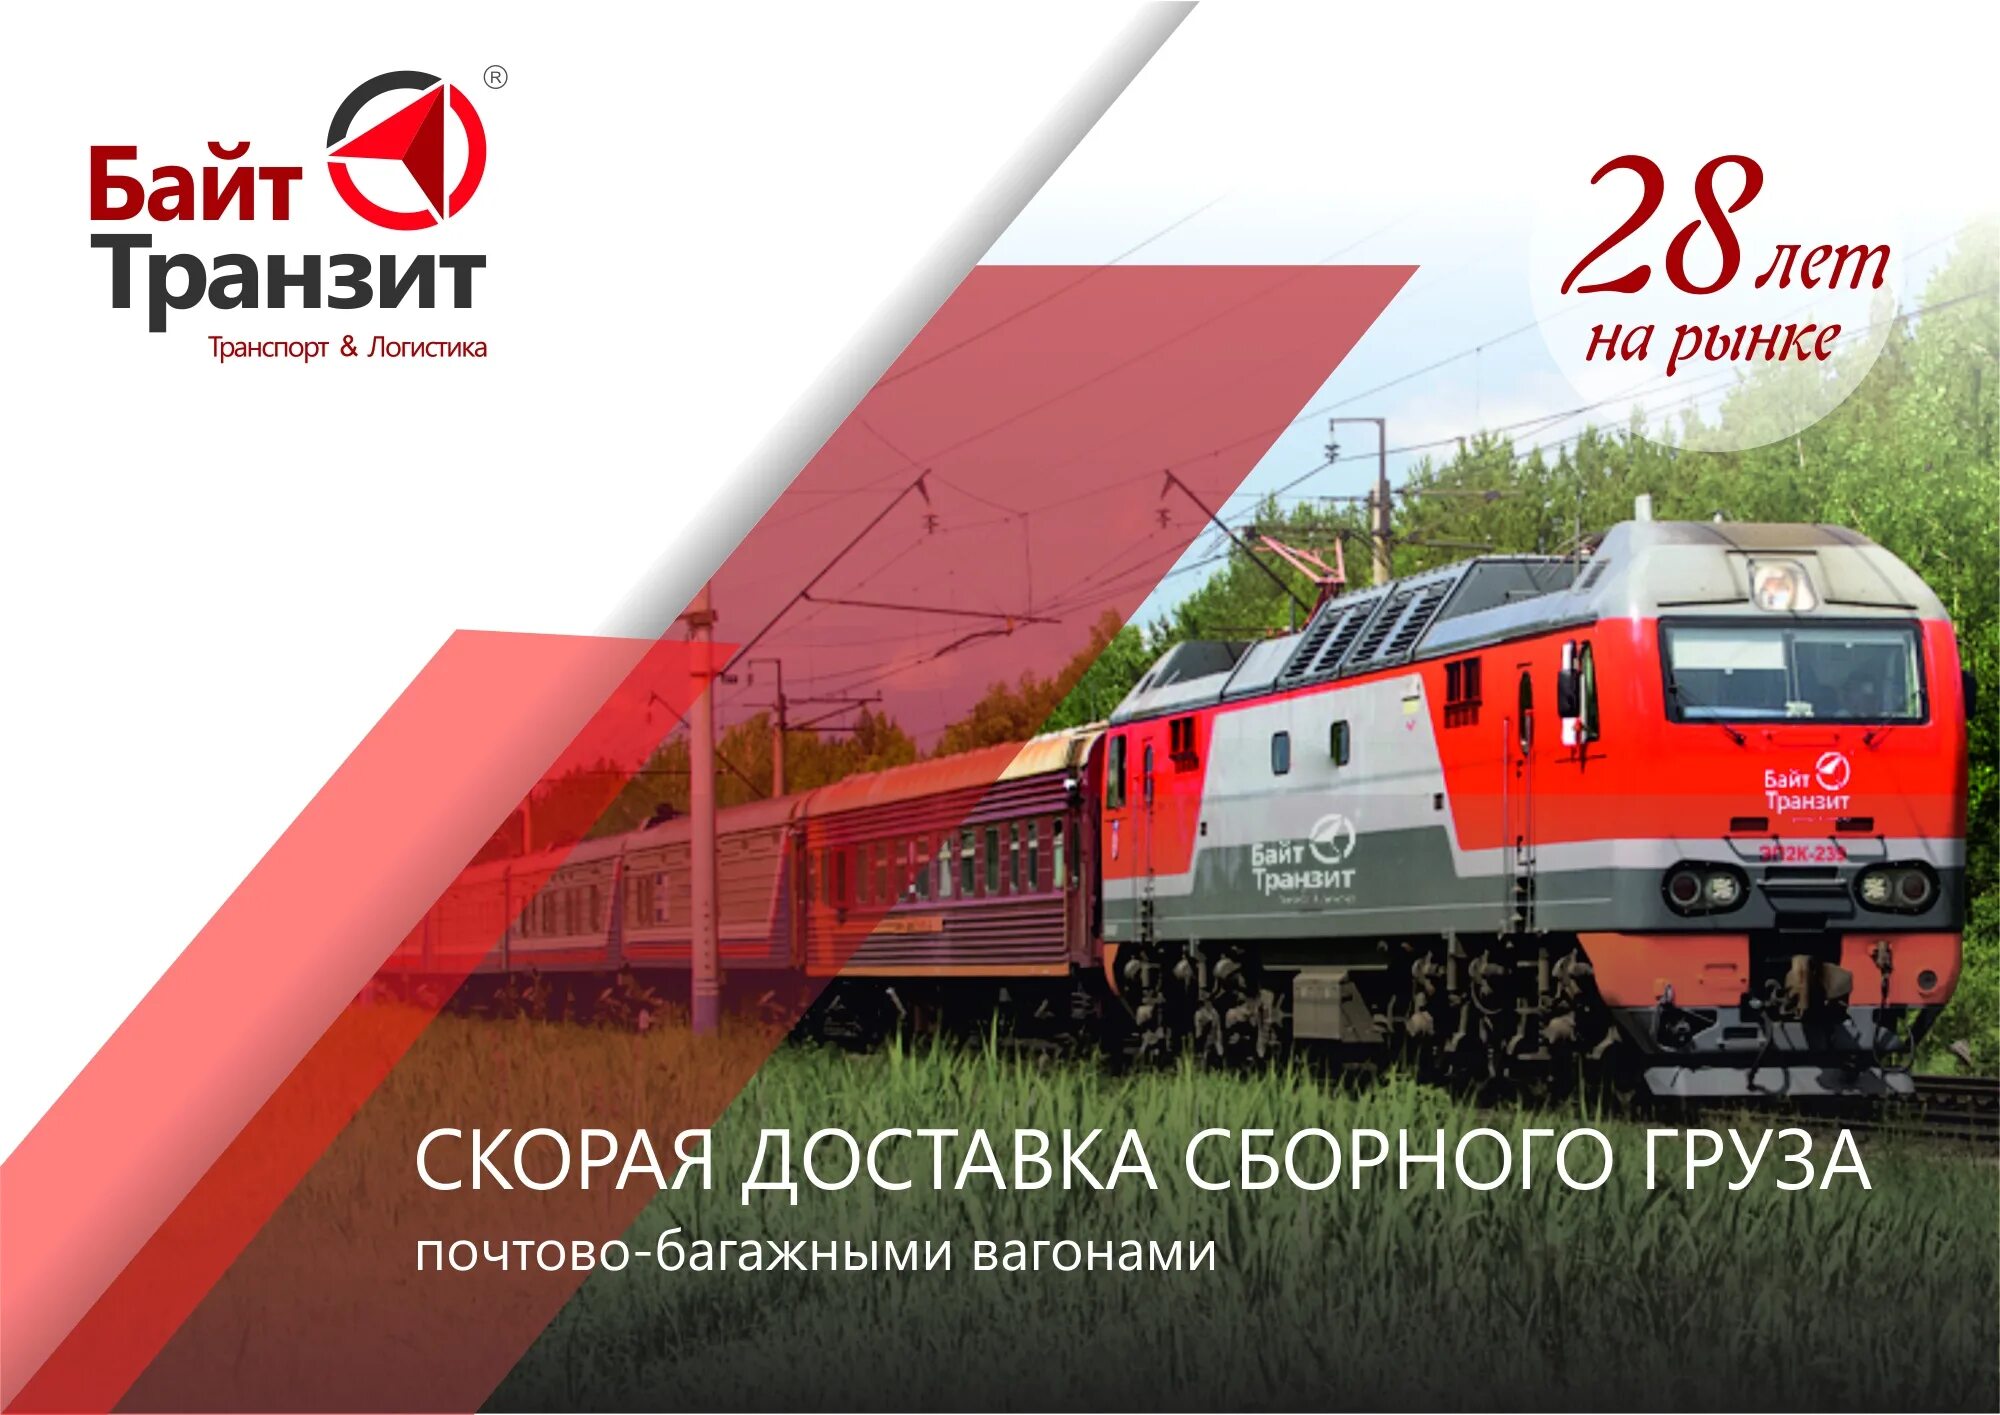 Байт Транзит транспортная компания. Байт Транзит Континент транспортная компания. Байт Транзит Новосибирск. Байт Транзит логотип.